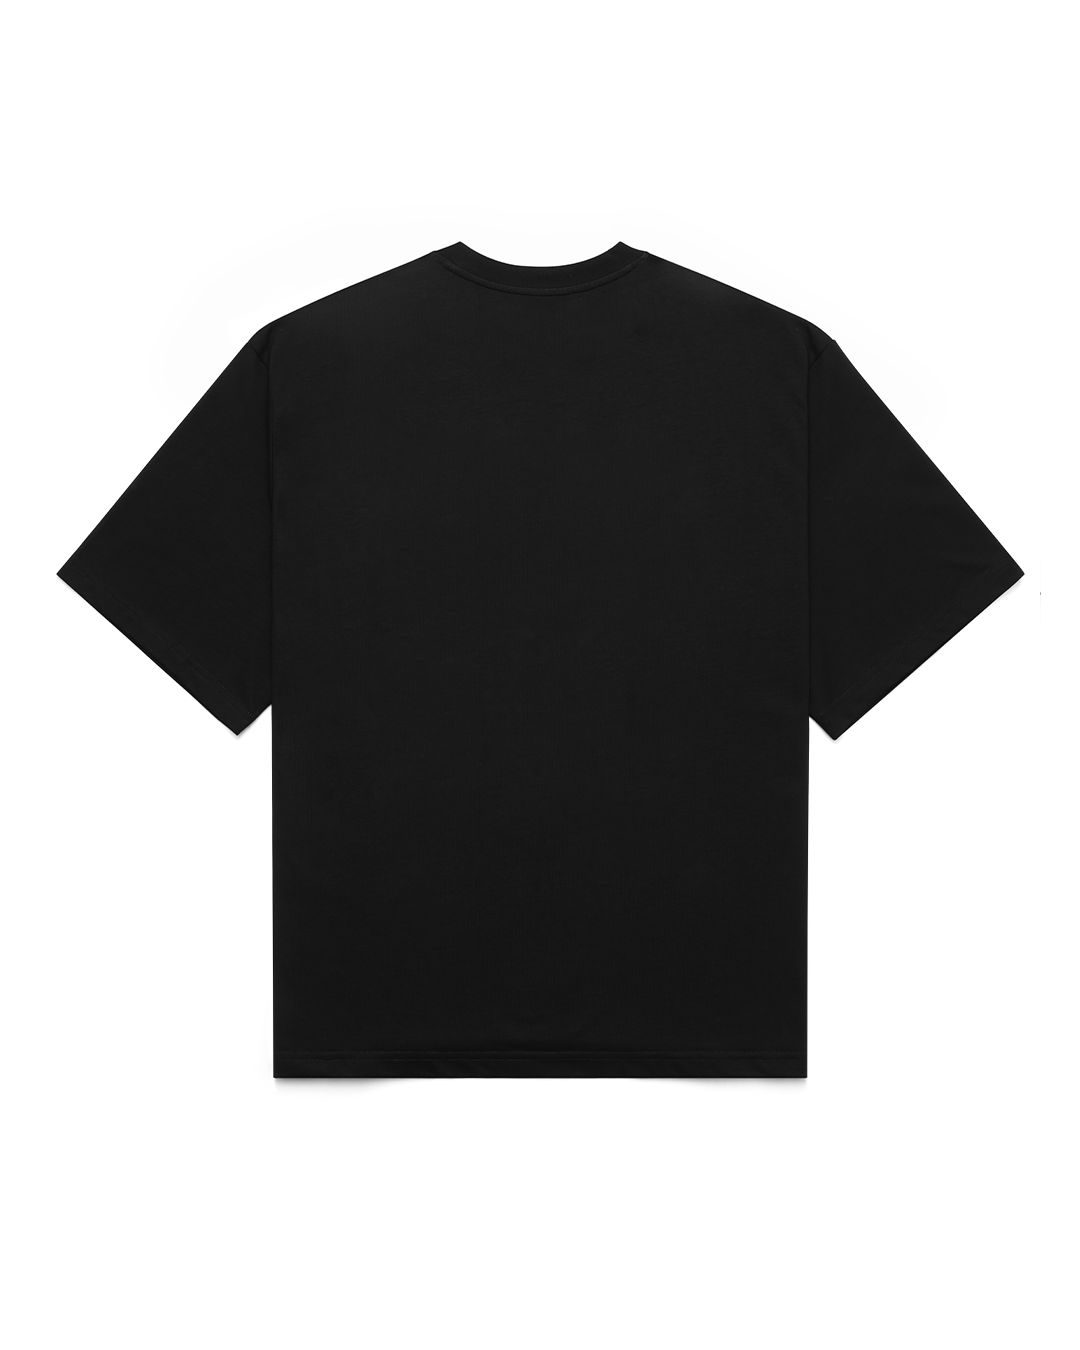 Black Chair T-shirt